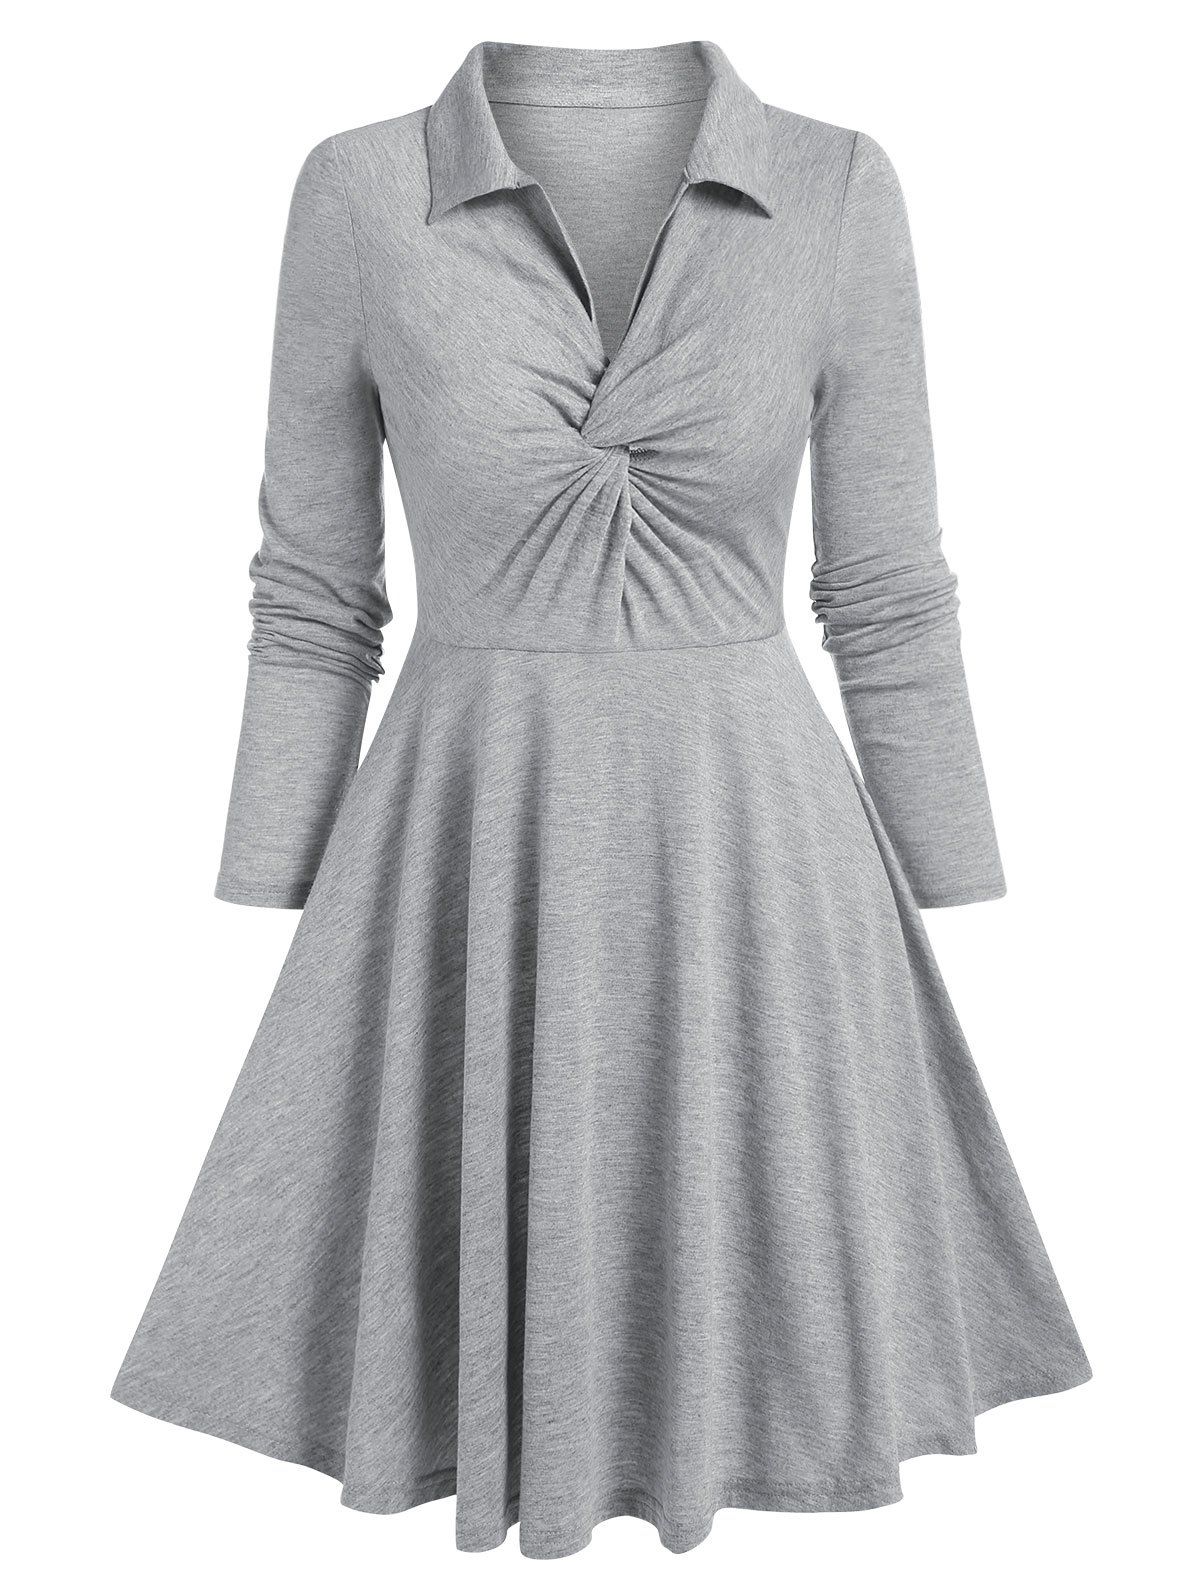 Twist Front Long Sleeve Heathered Dress - LIGHT GRAY XXXL